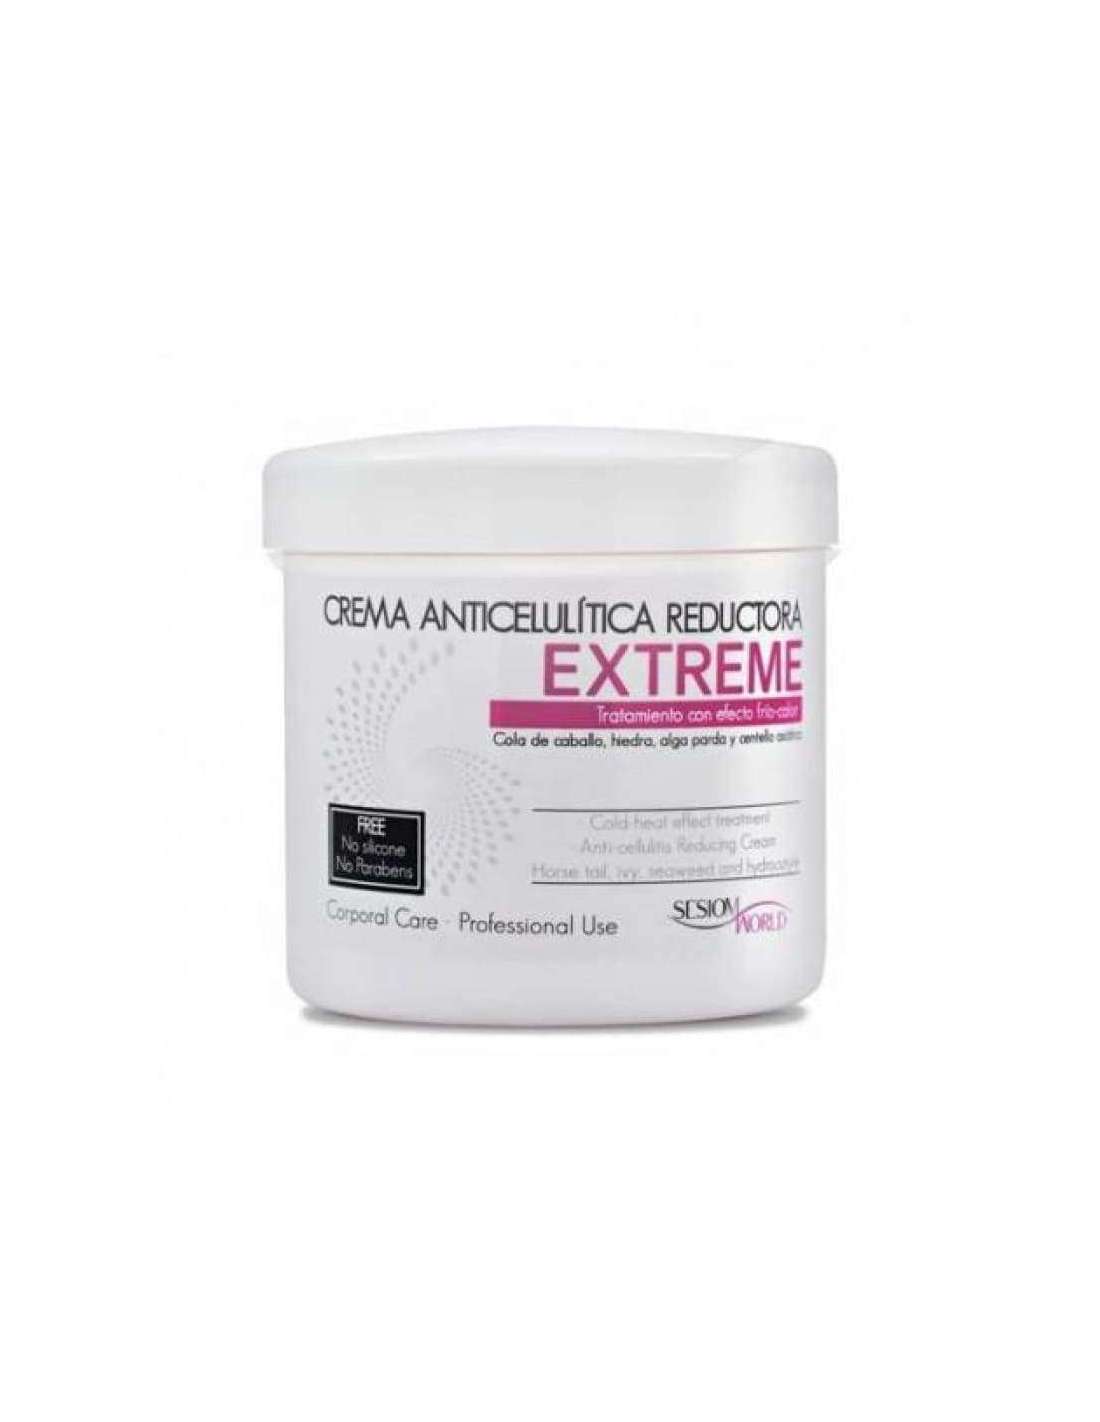 ⭐ Crema Anticelulítica Reductora EXTREME ef. térmico ⭐